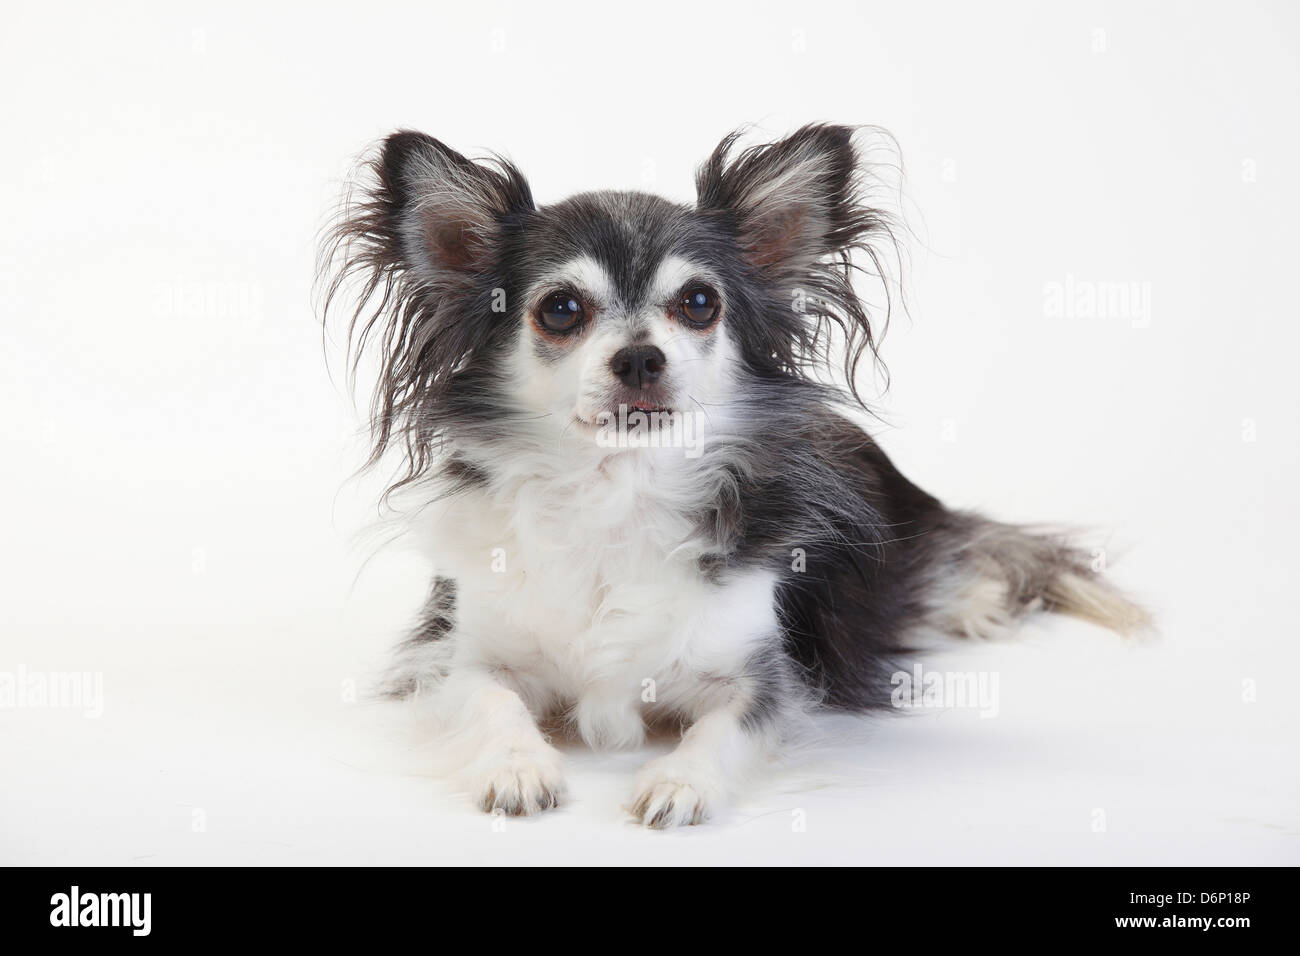 Chihuahua, longhaired, nero con bianco, 10 anni |Chihuahua, langhaarig, schwarz mit weiss, 10 Jahre alt / alter Hund Foto Stock